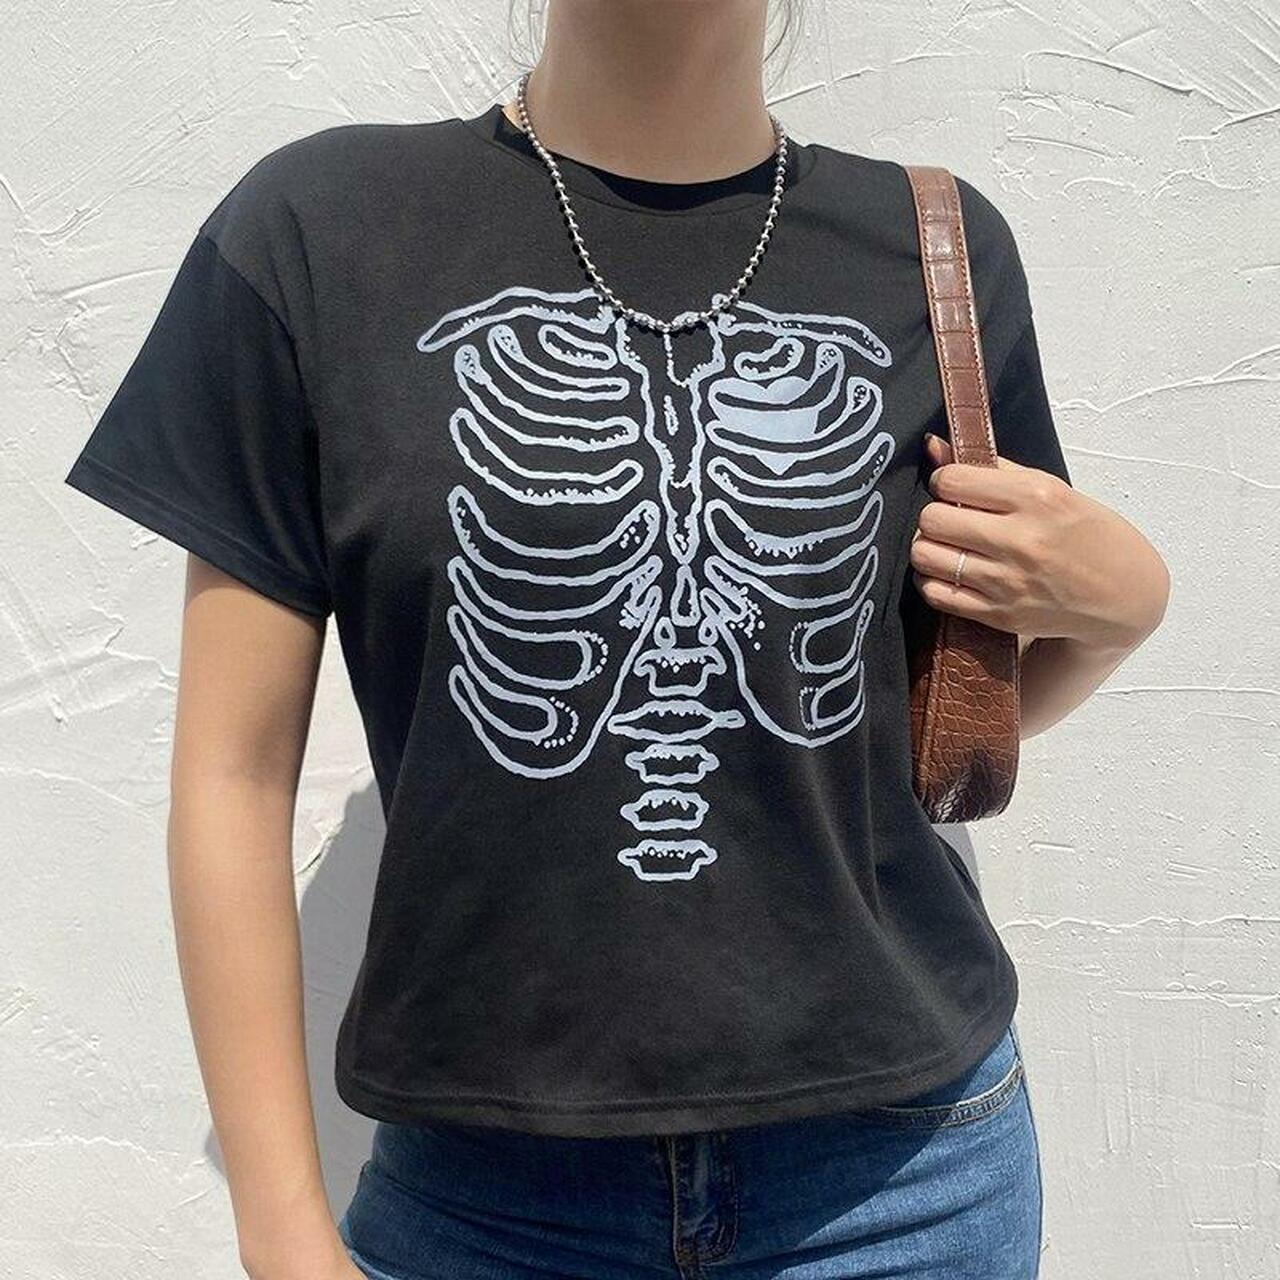 Edgy aesthetic skeleton print tee